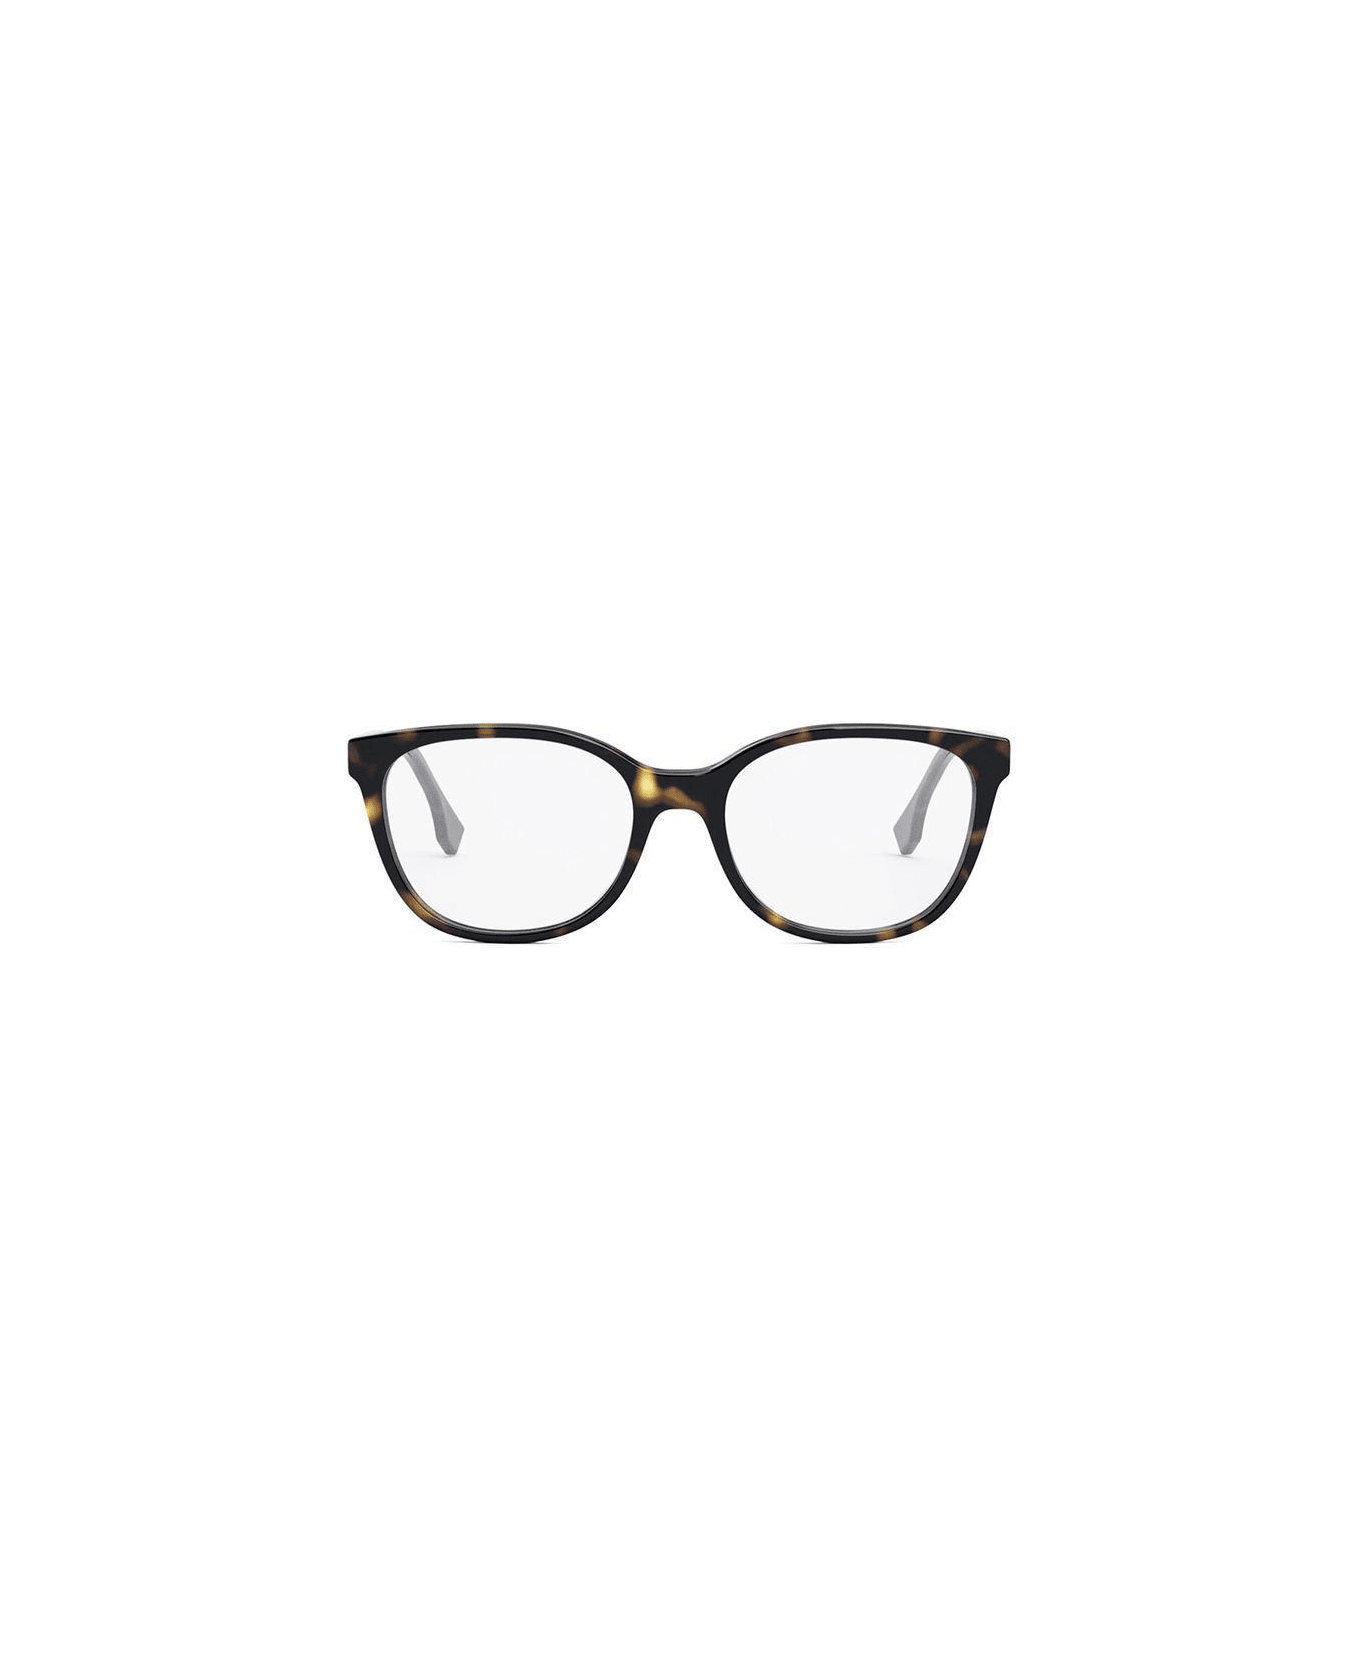 Fendi Eyewear Round Frame Glasses - 052